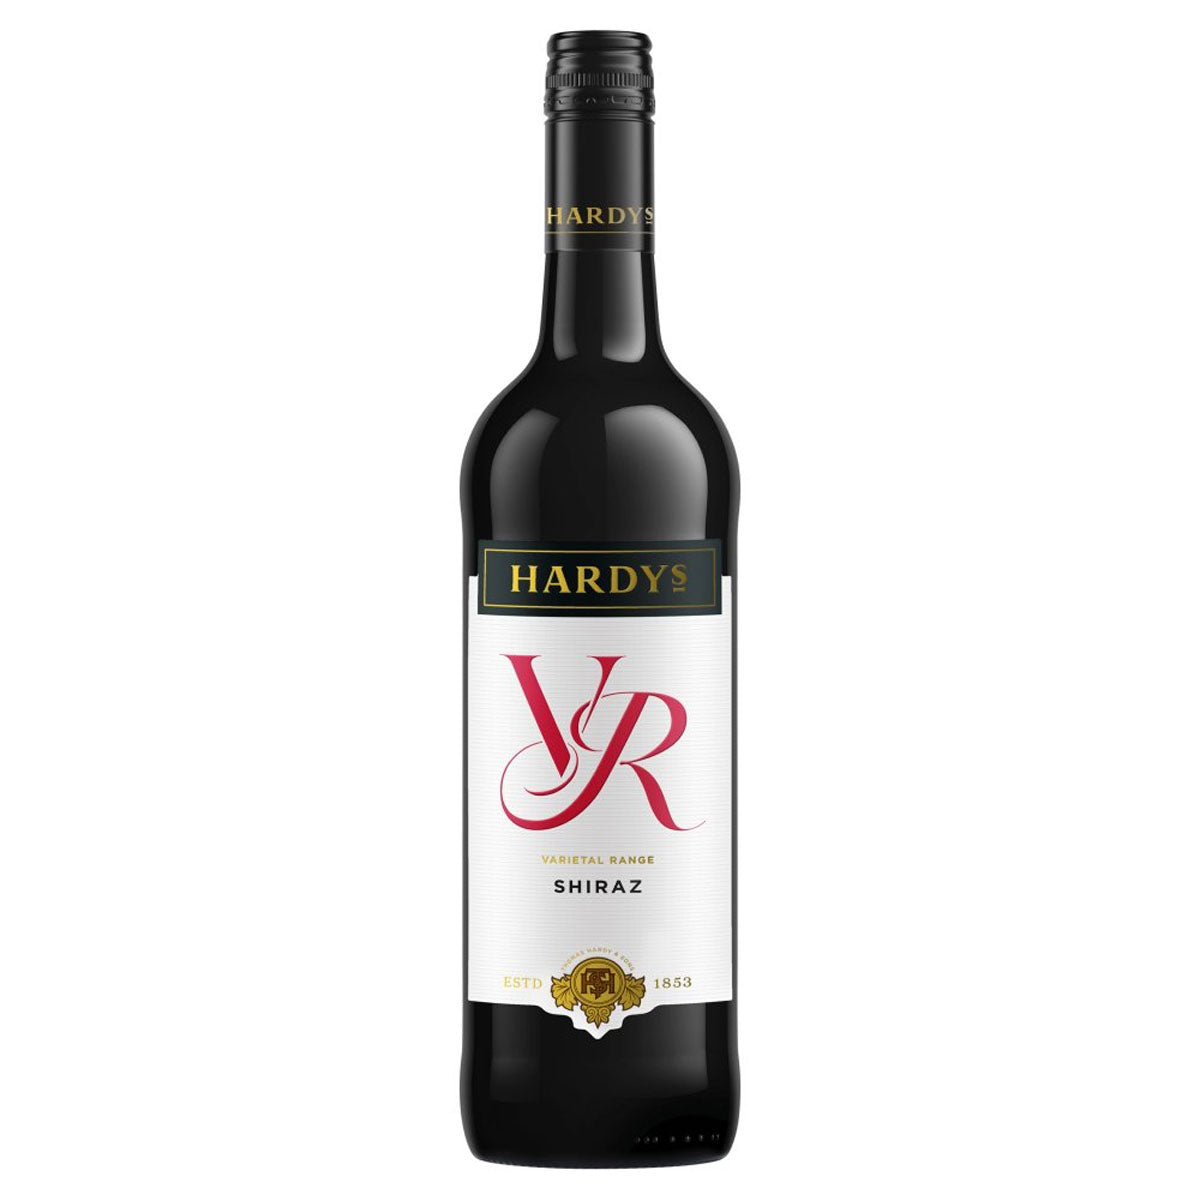 Hardys - VR Shiraz (13.5% ABV) - 750ml red wine.